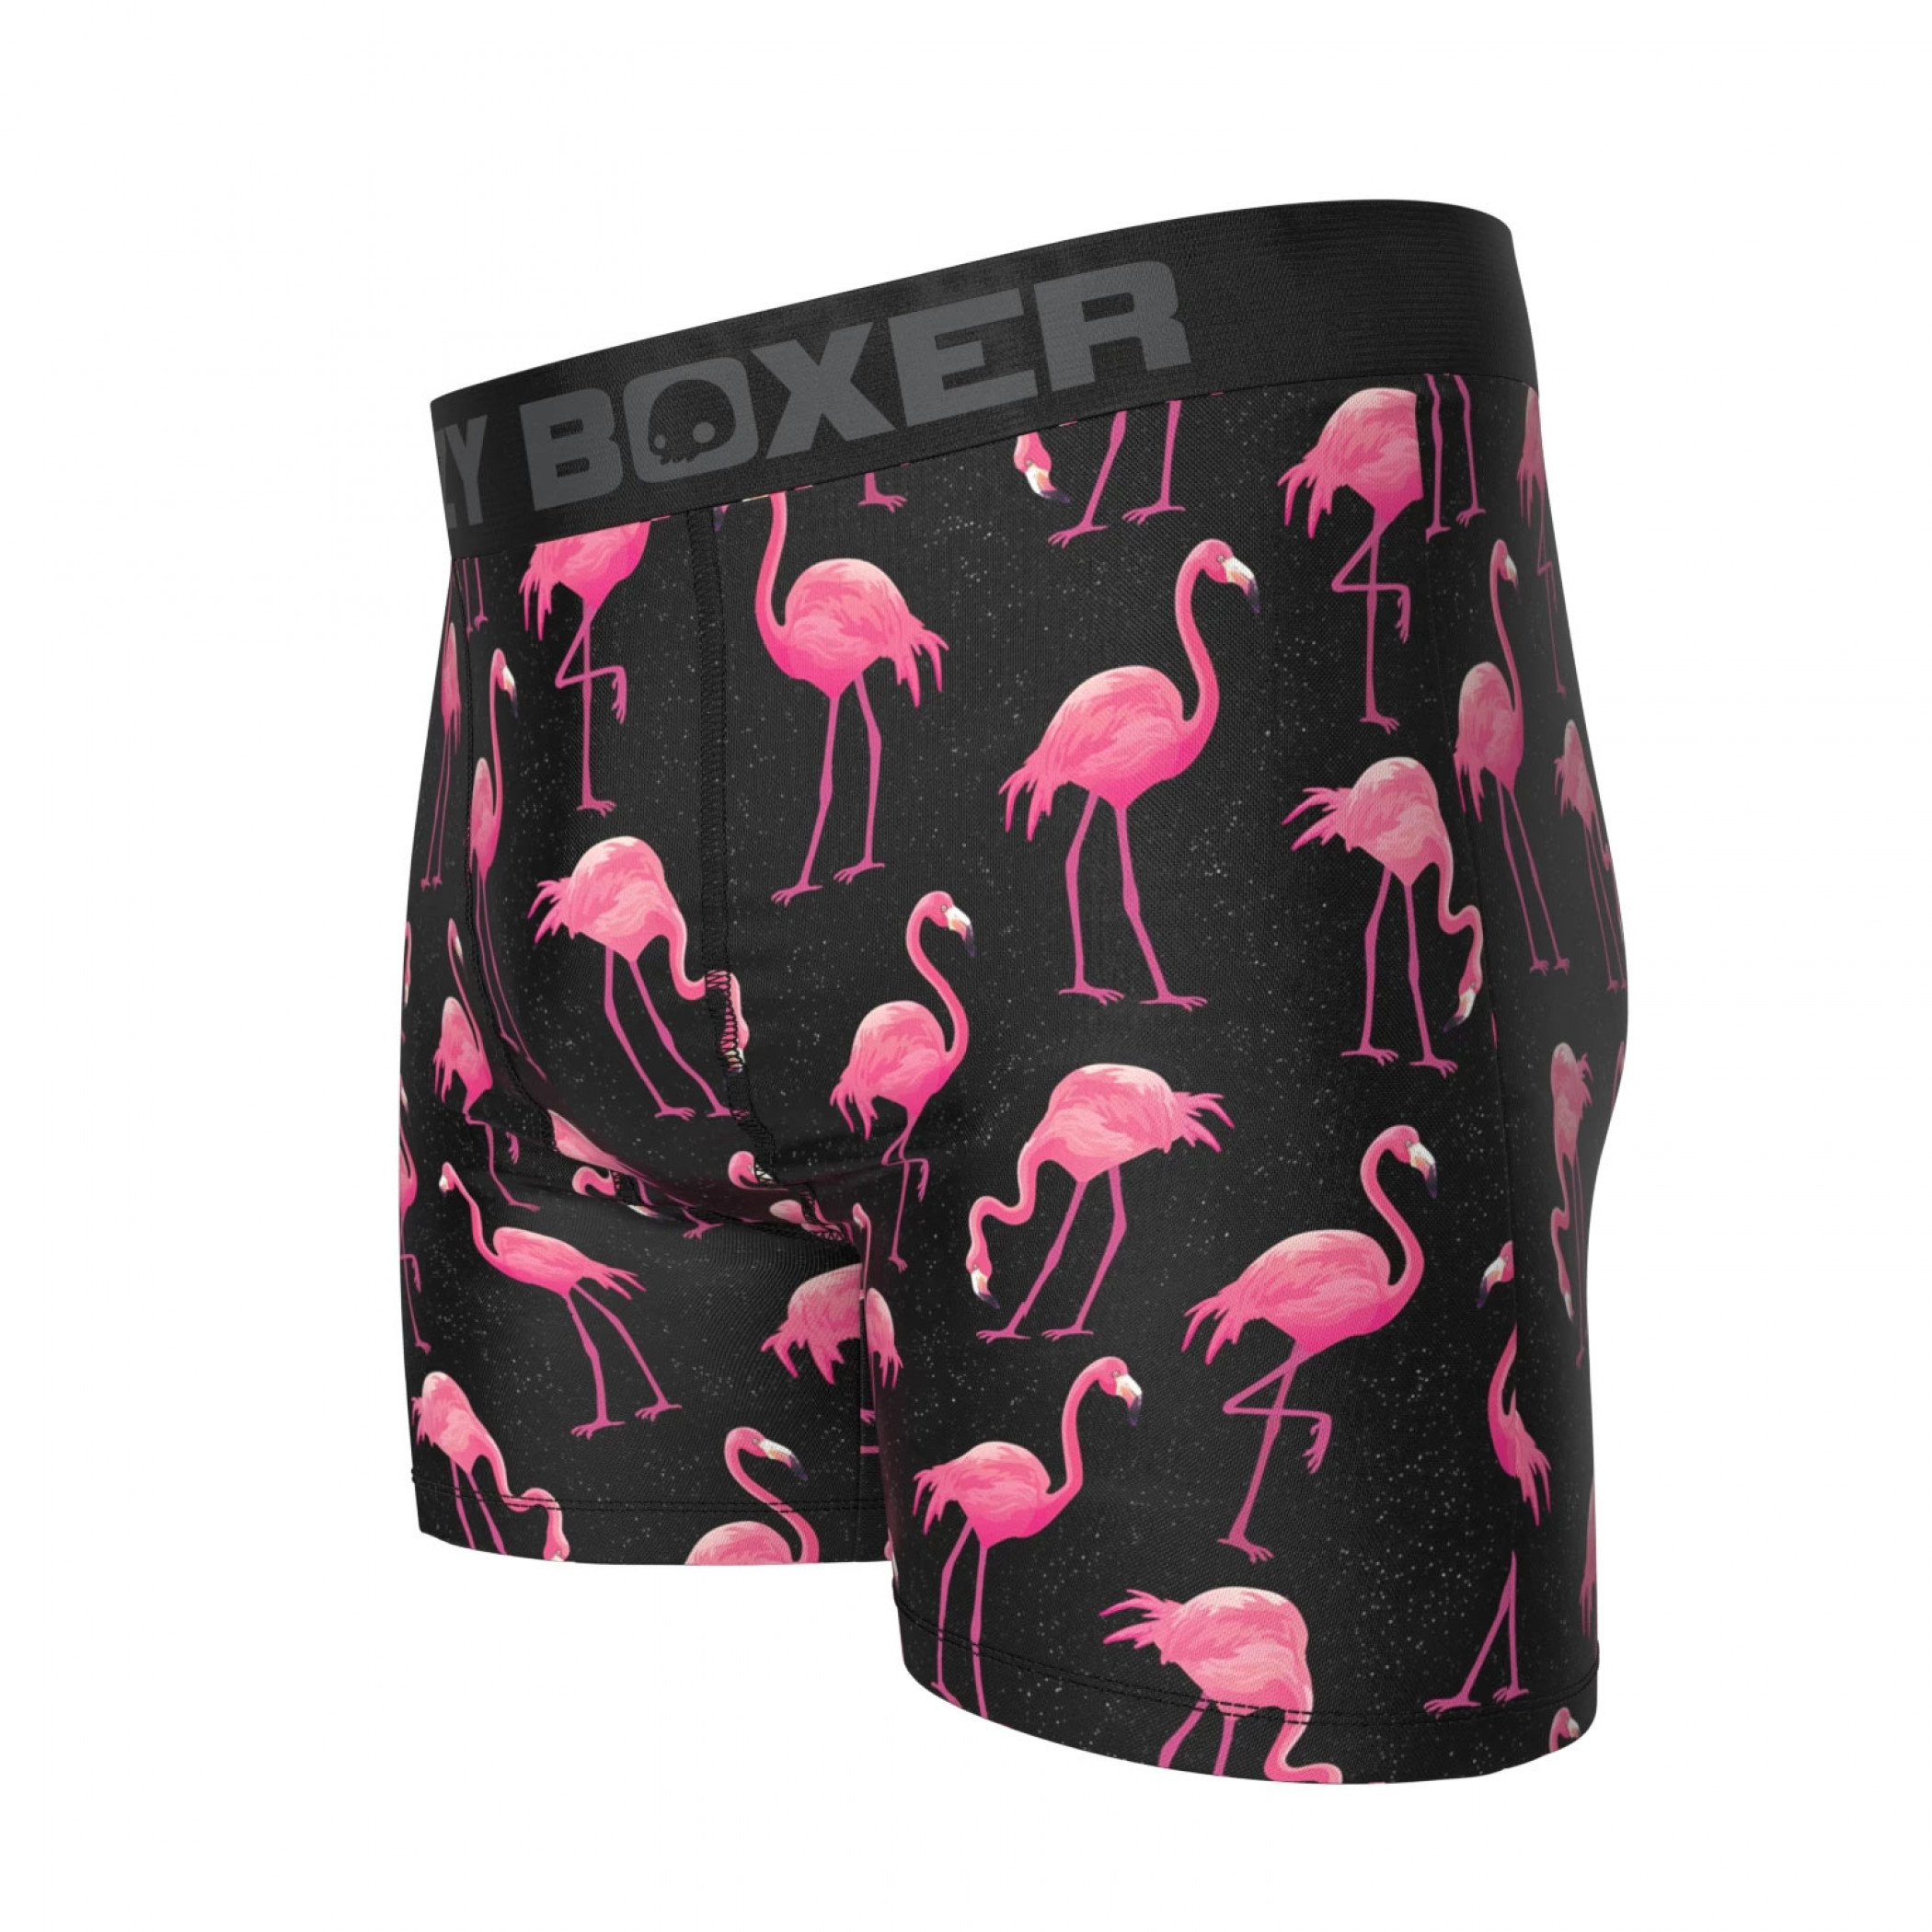 Flamingo Boxer Briefs